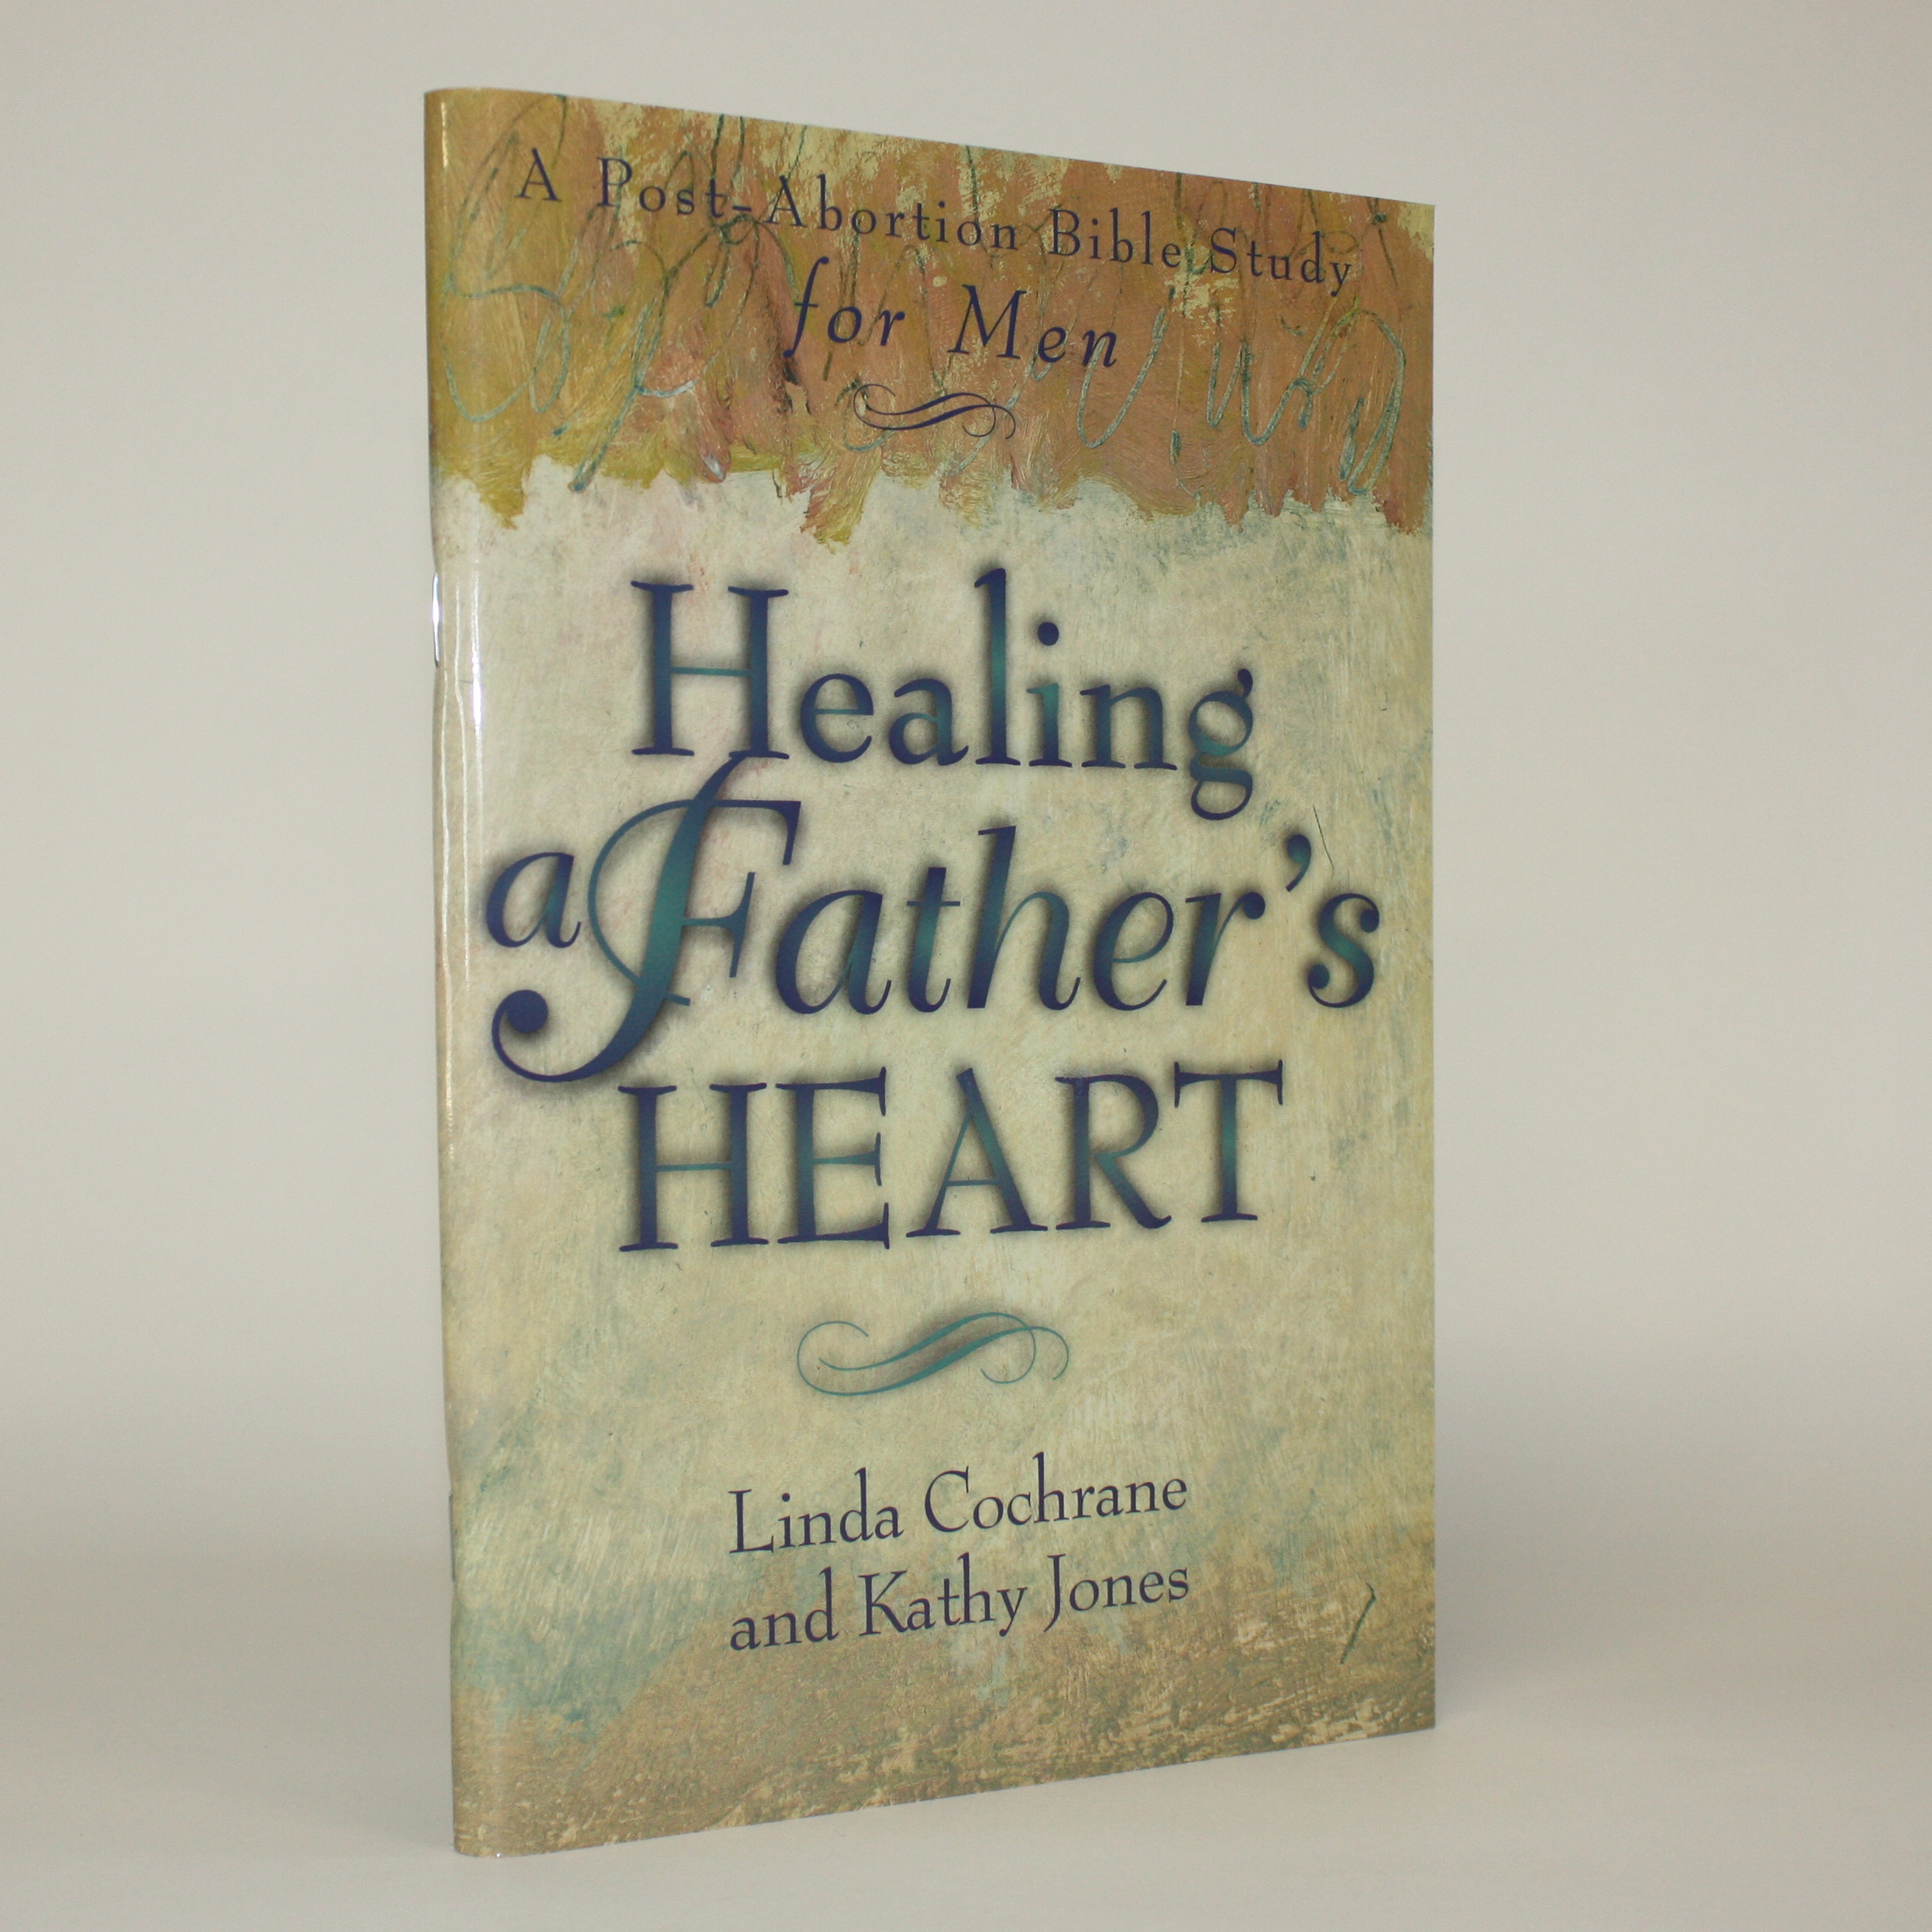 Healing a Father’s Heart